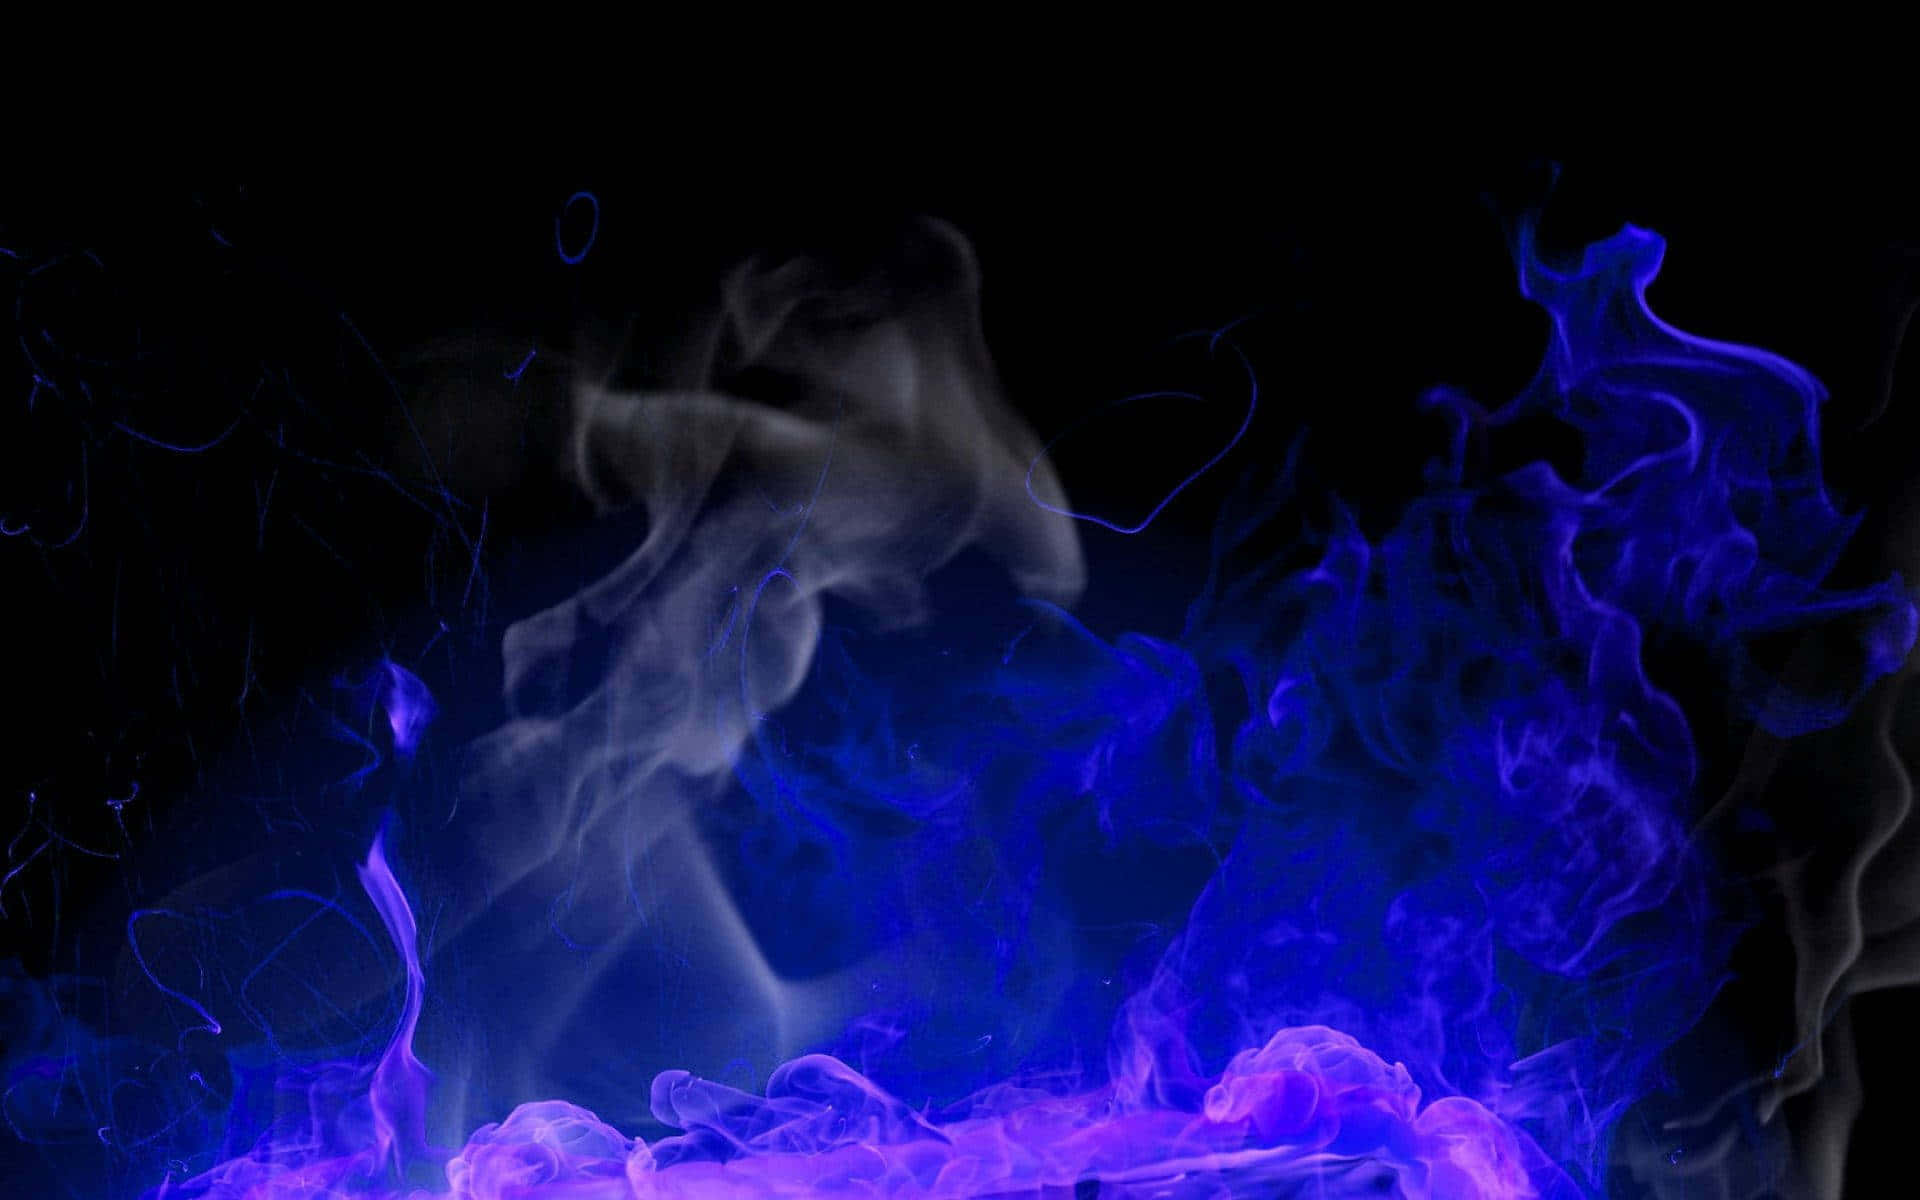 A stunning scene of purple fire blazing